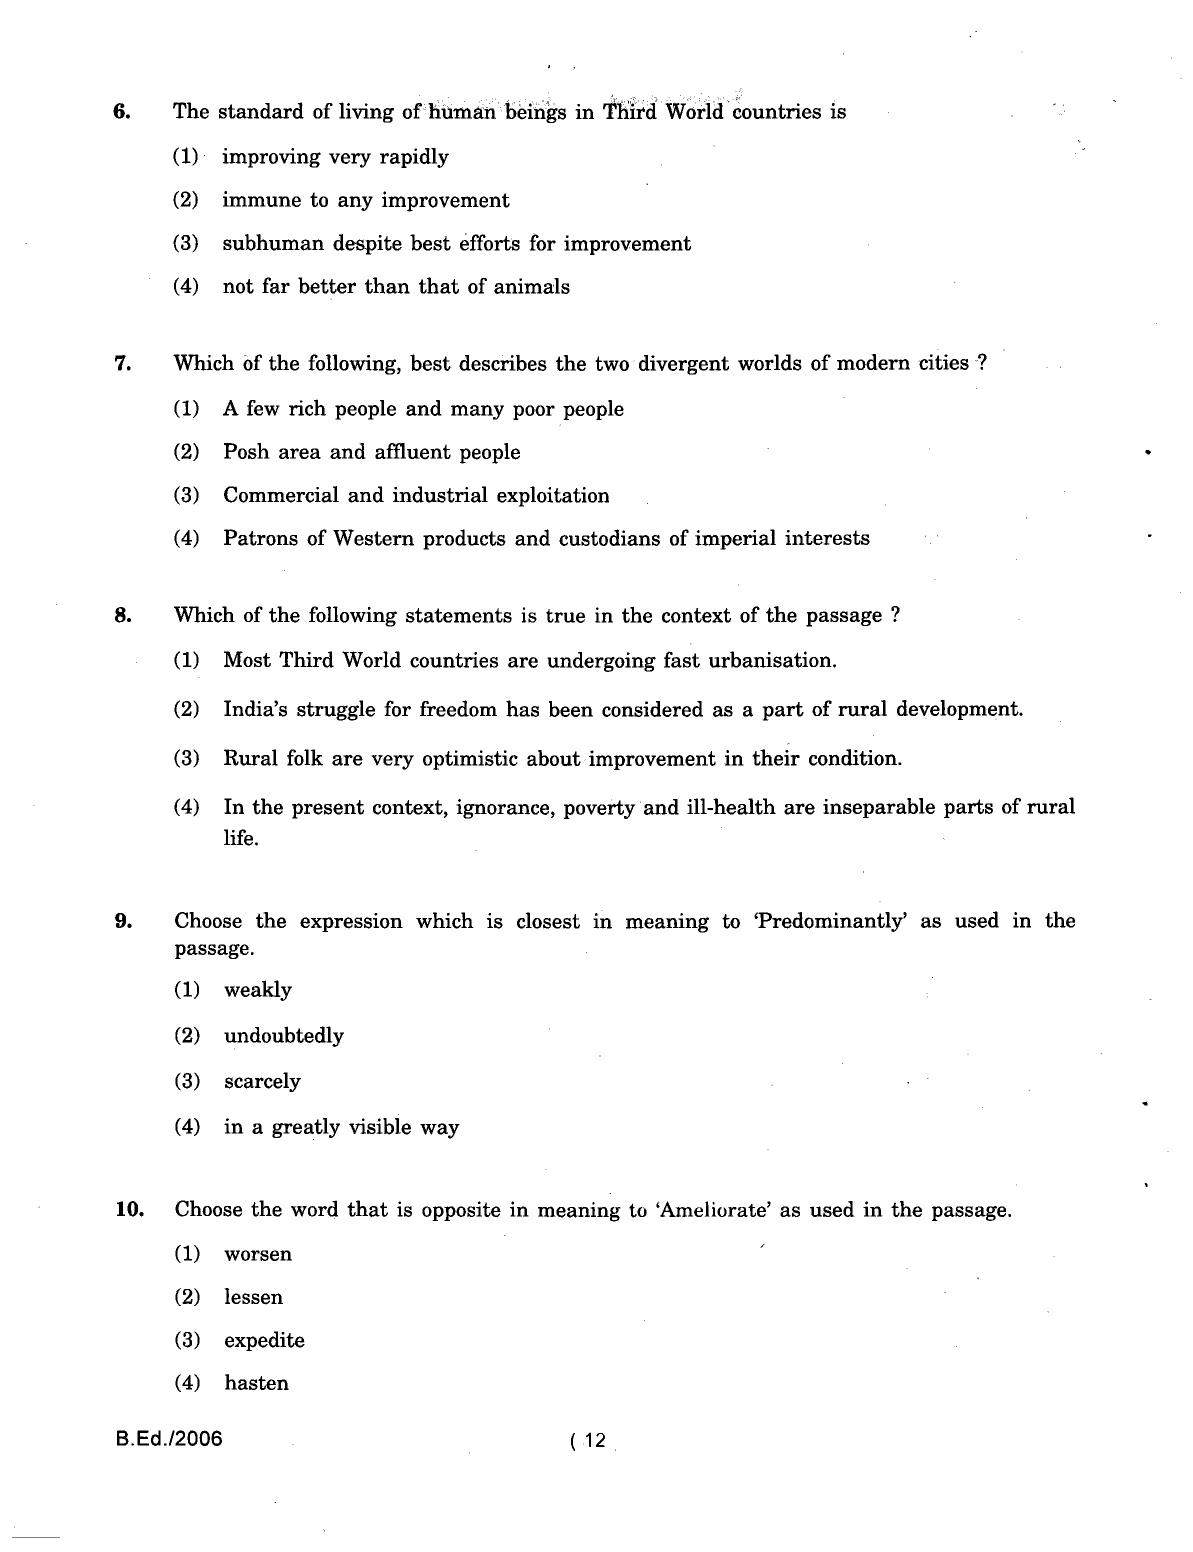 IGNOU B.Ed 2006 Question Paper - Page 12